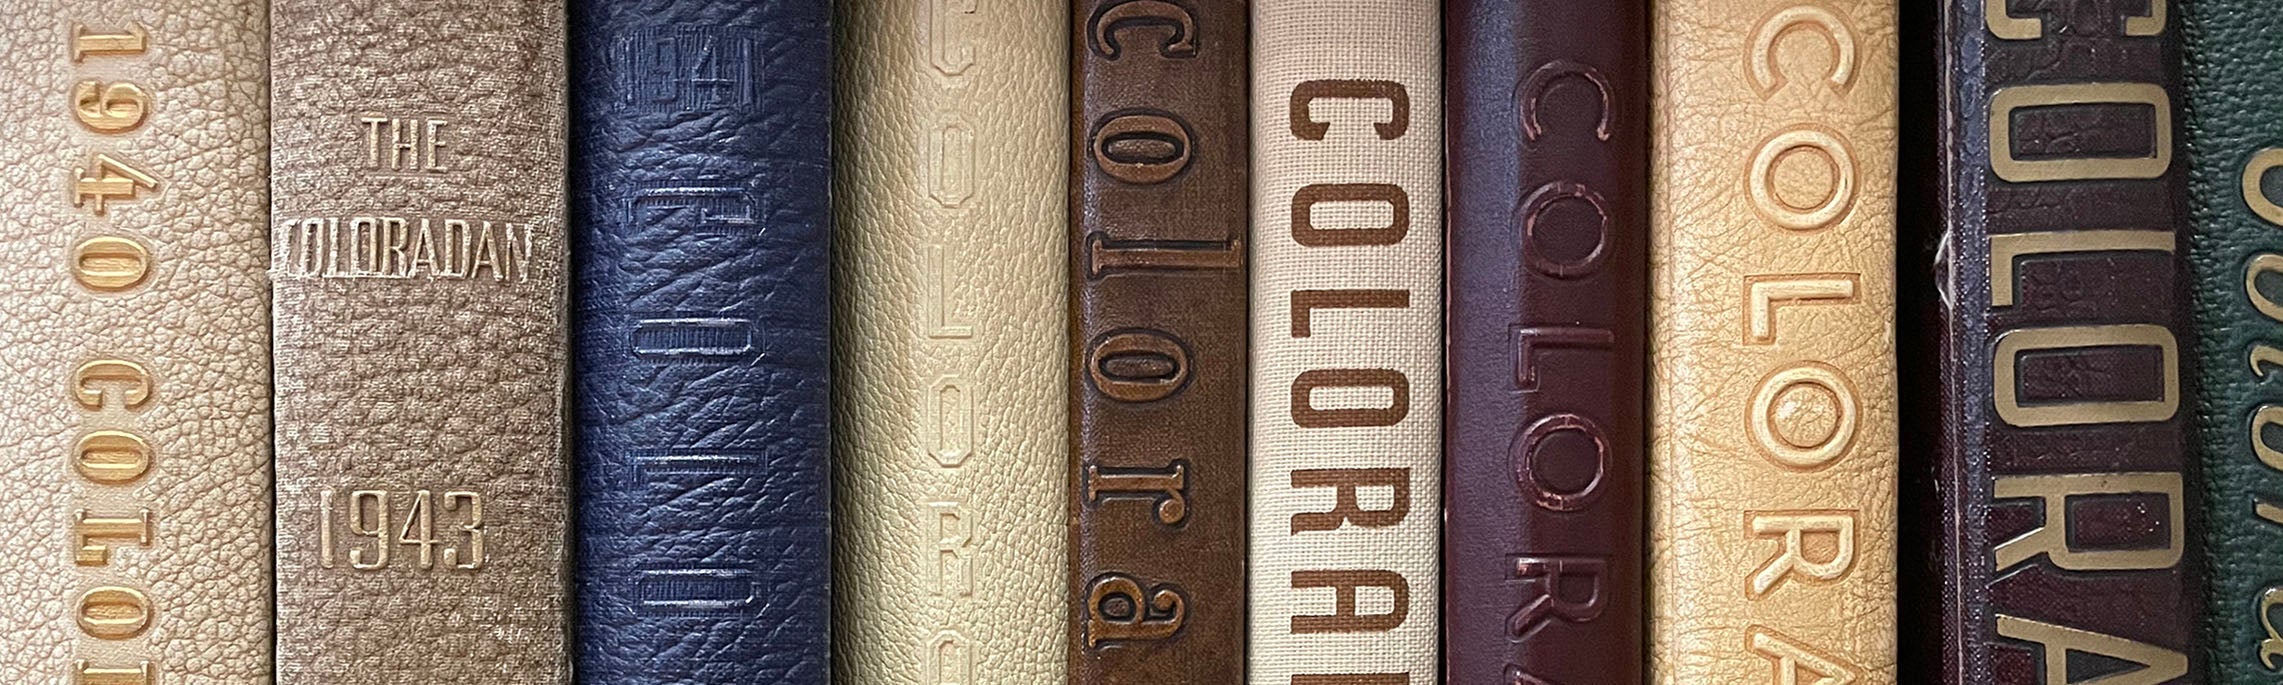 Coloradan yearbooks